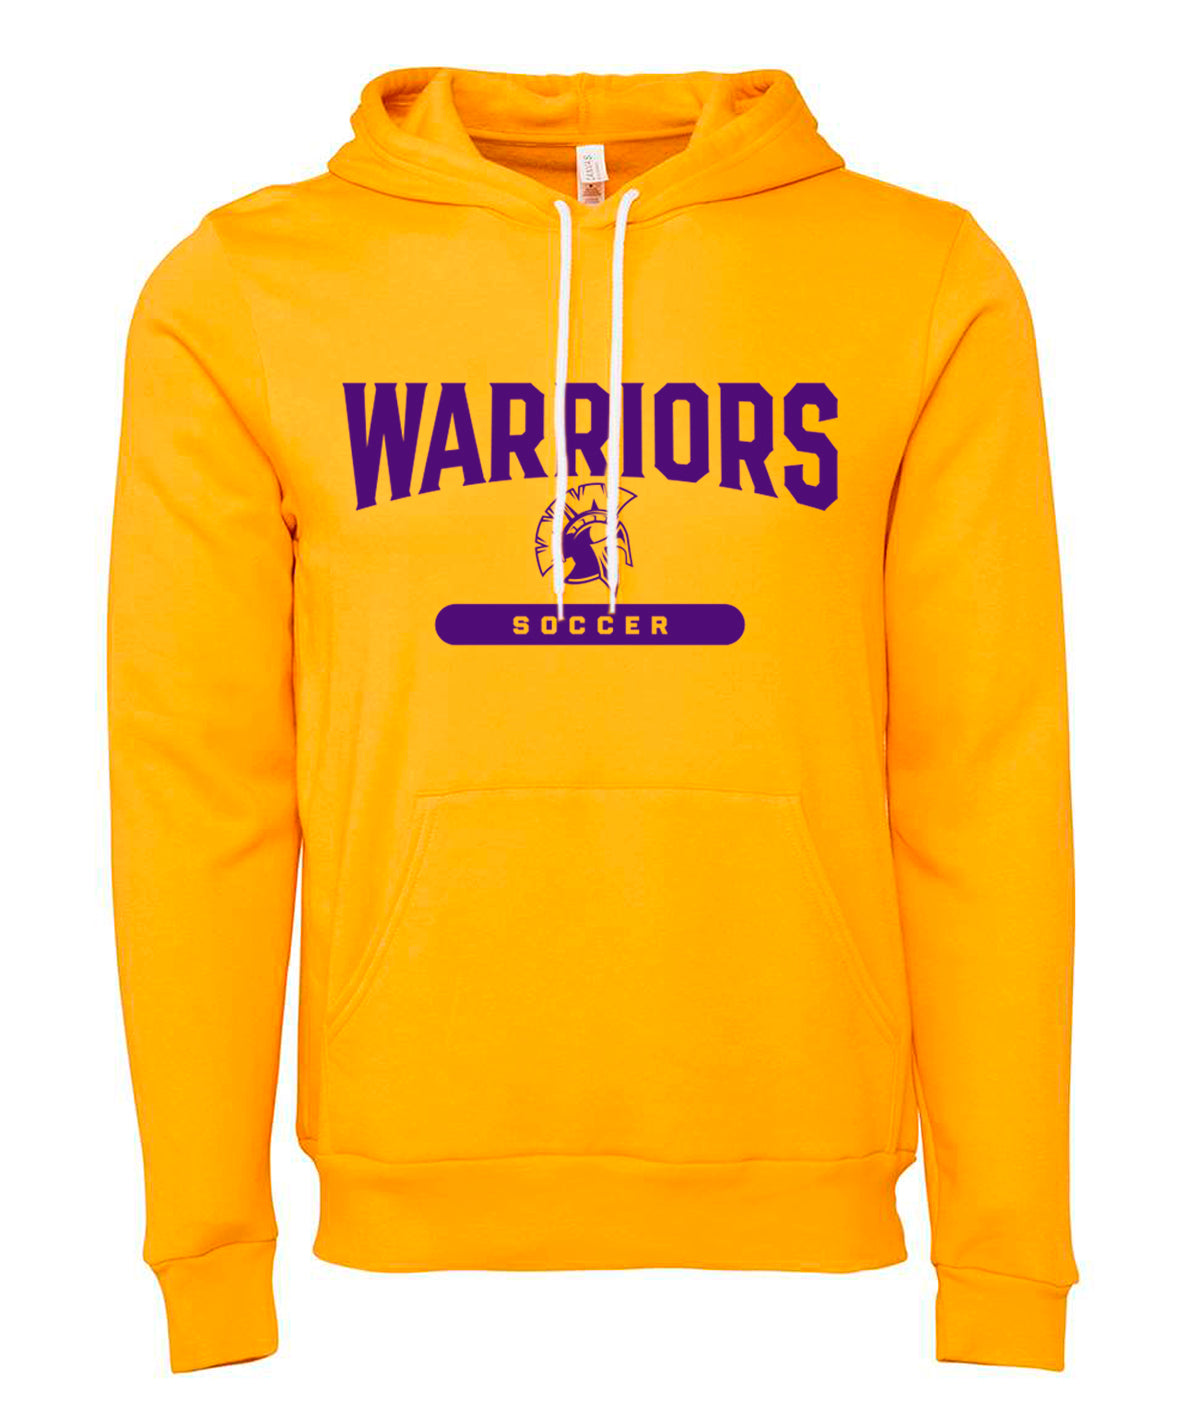 Warriors Soccer Softstyle Hooded Sweatshirt